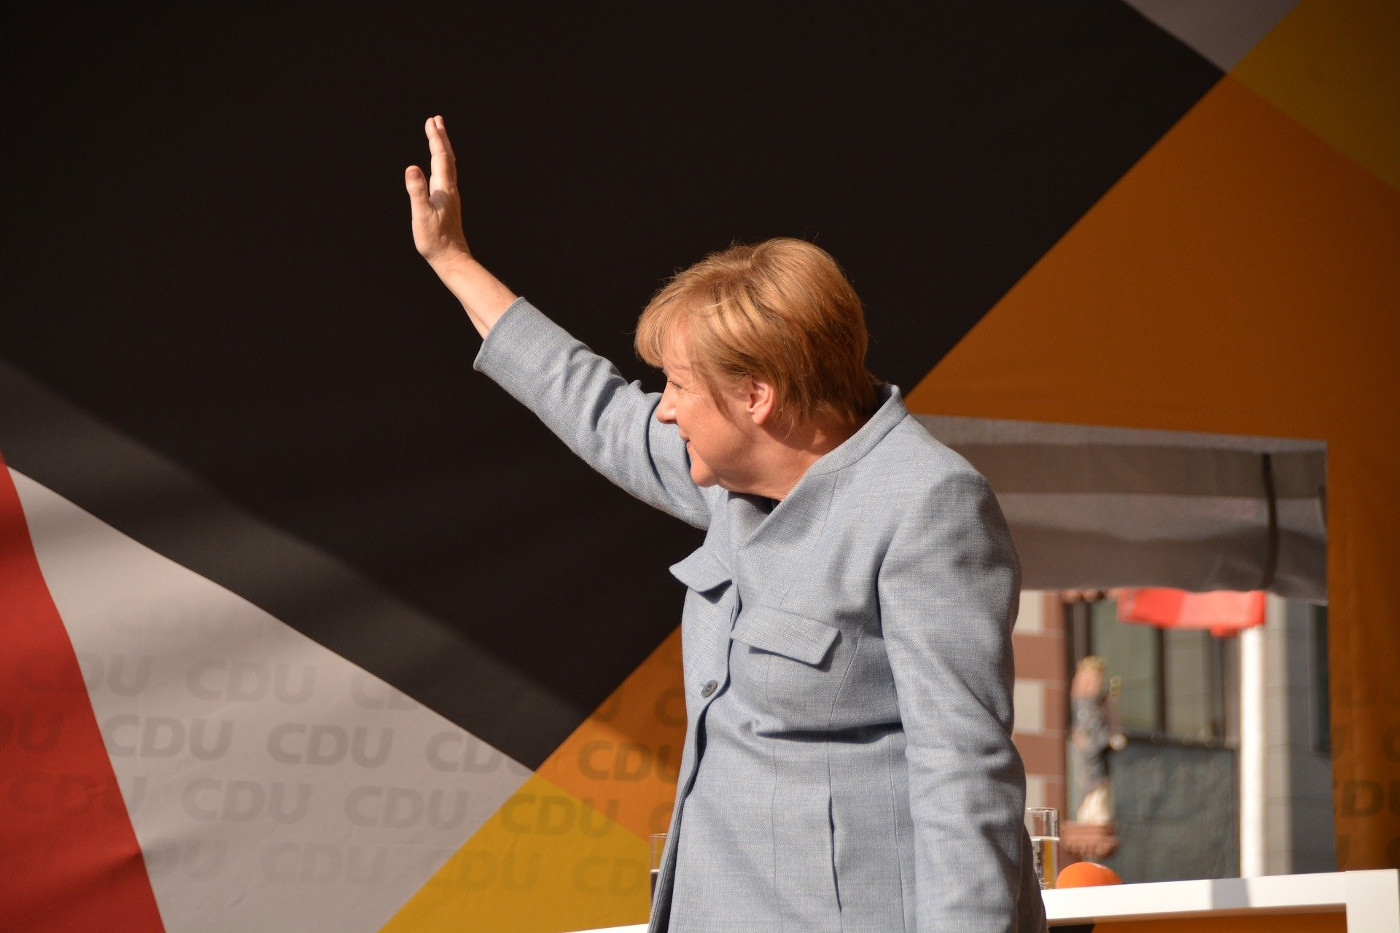 Angela Merkel genießt in Lateinamerika hohes Ansehen. Foto: pixabay, CCO1.0